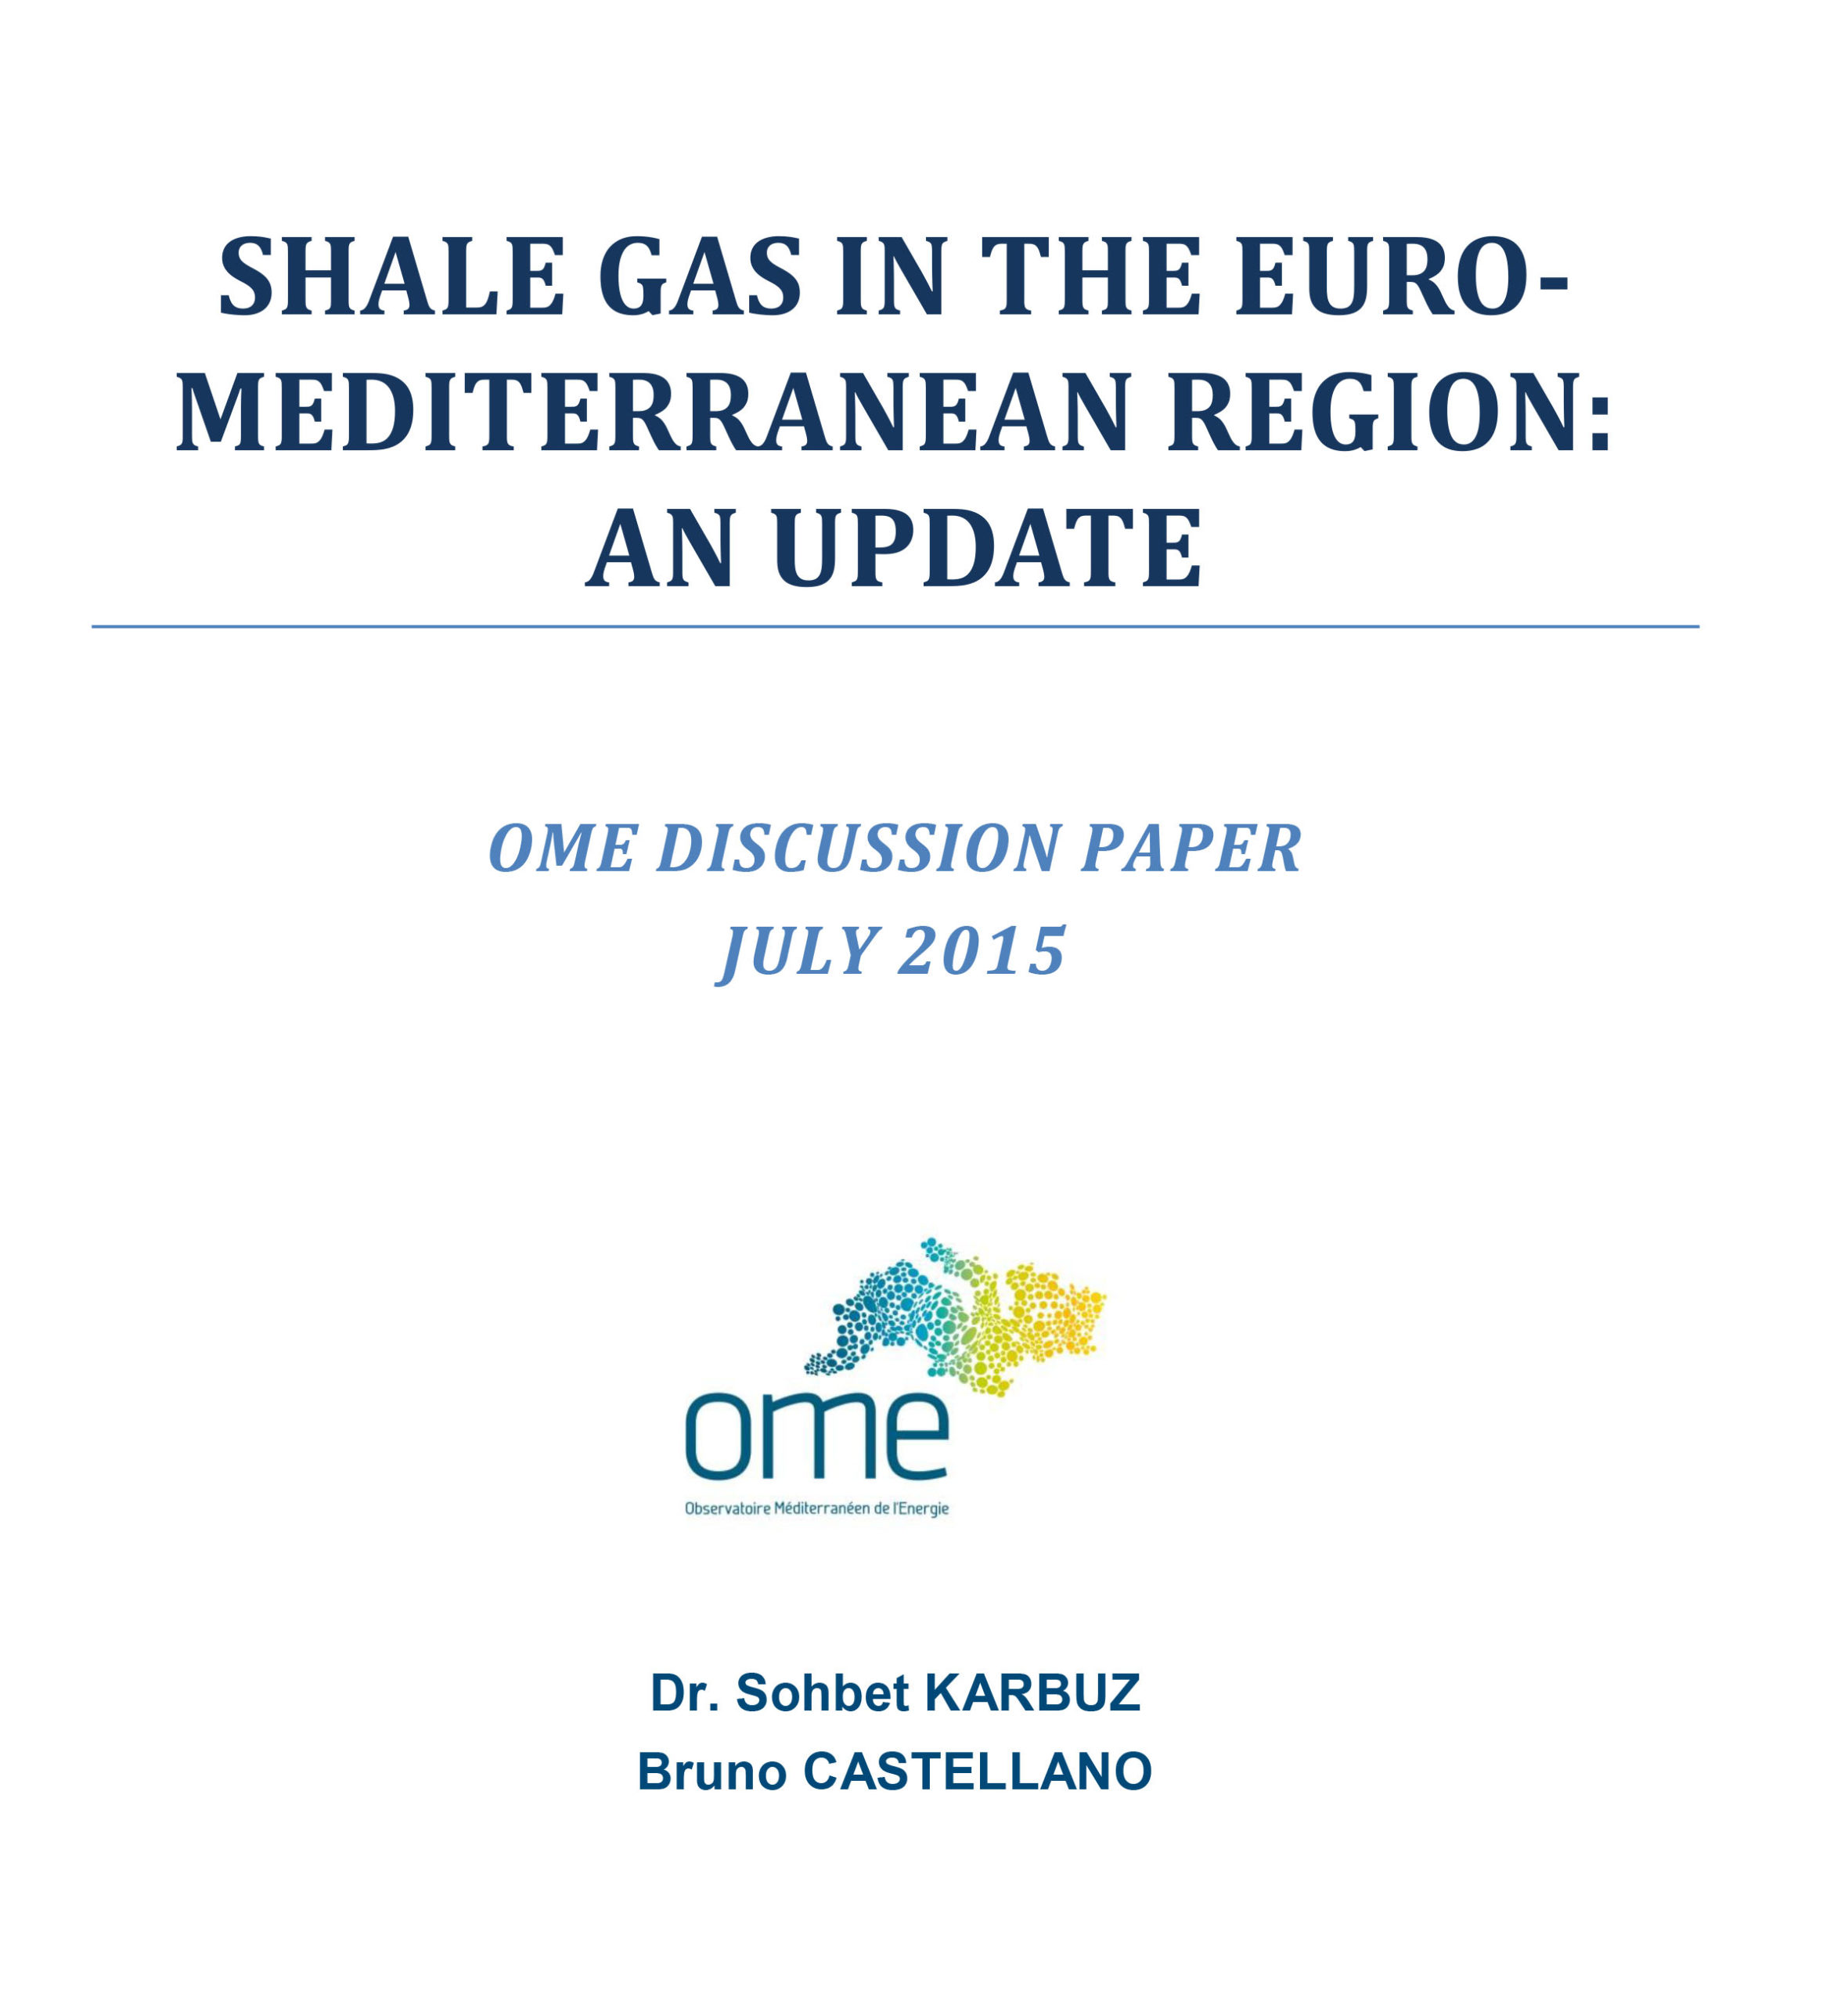 Shale gas in the Euro-Mediterranean Region: an update, July 2015